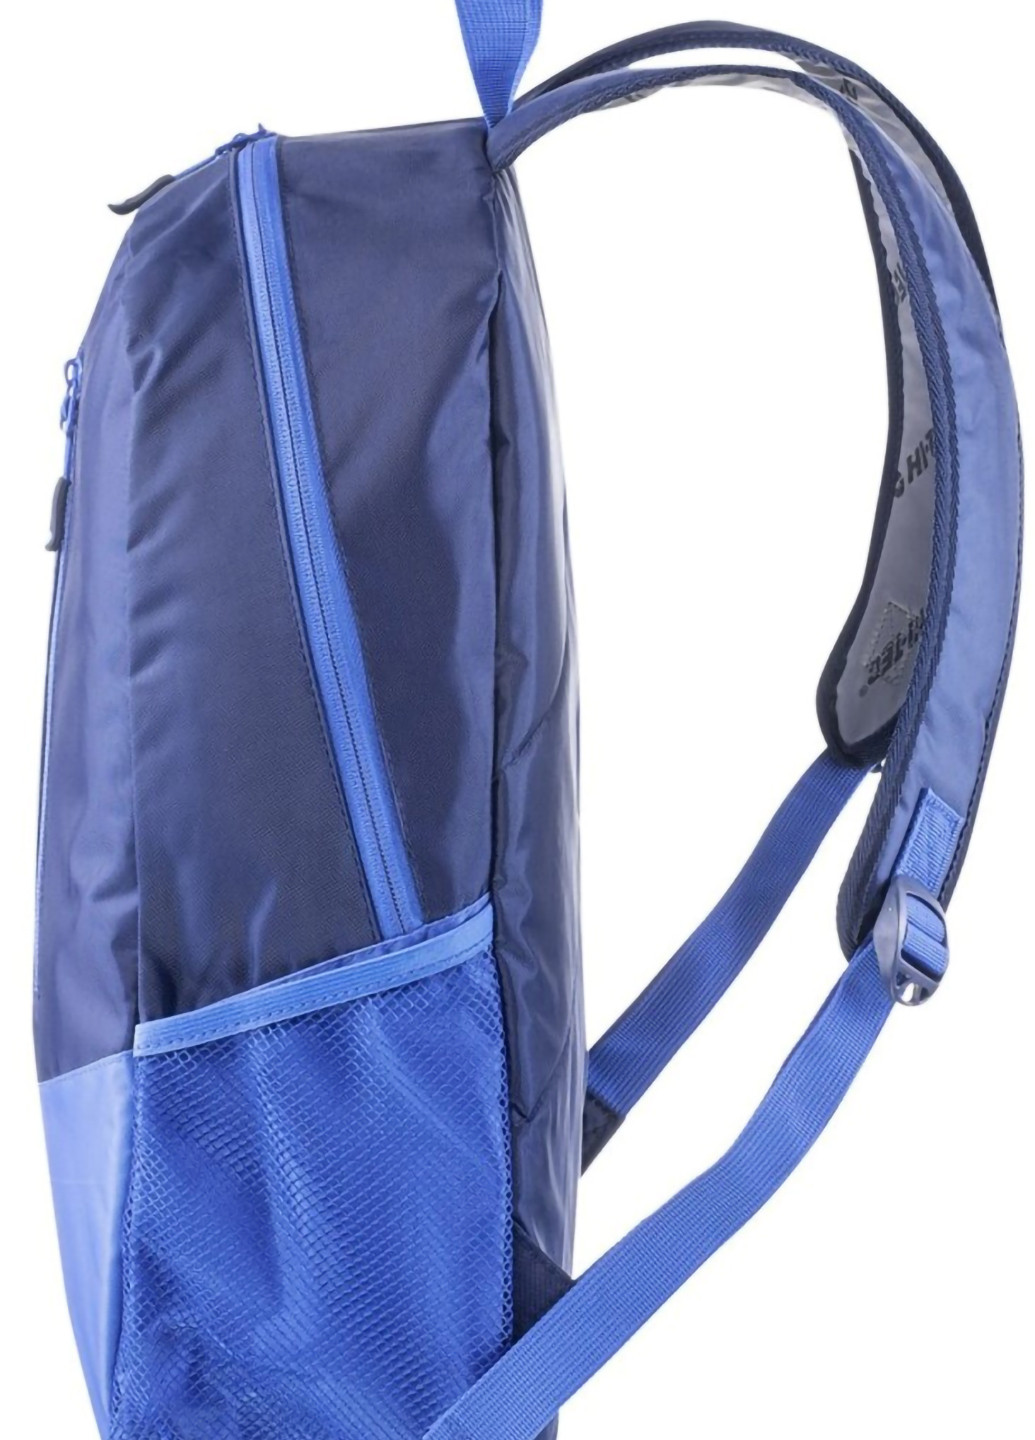 Спортивный рюкзак 44х30х13 см Hi-Tec (255710103)